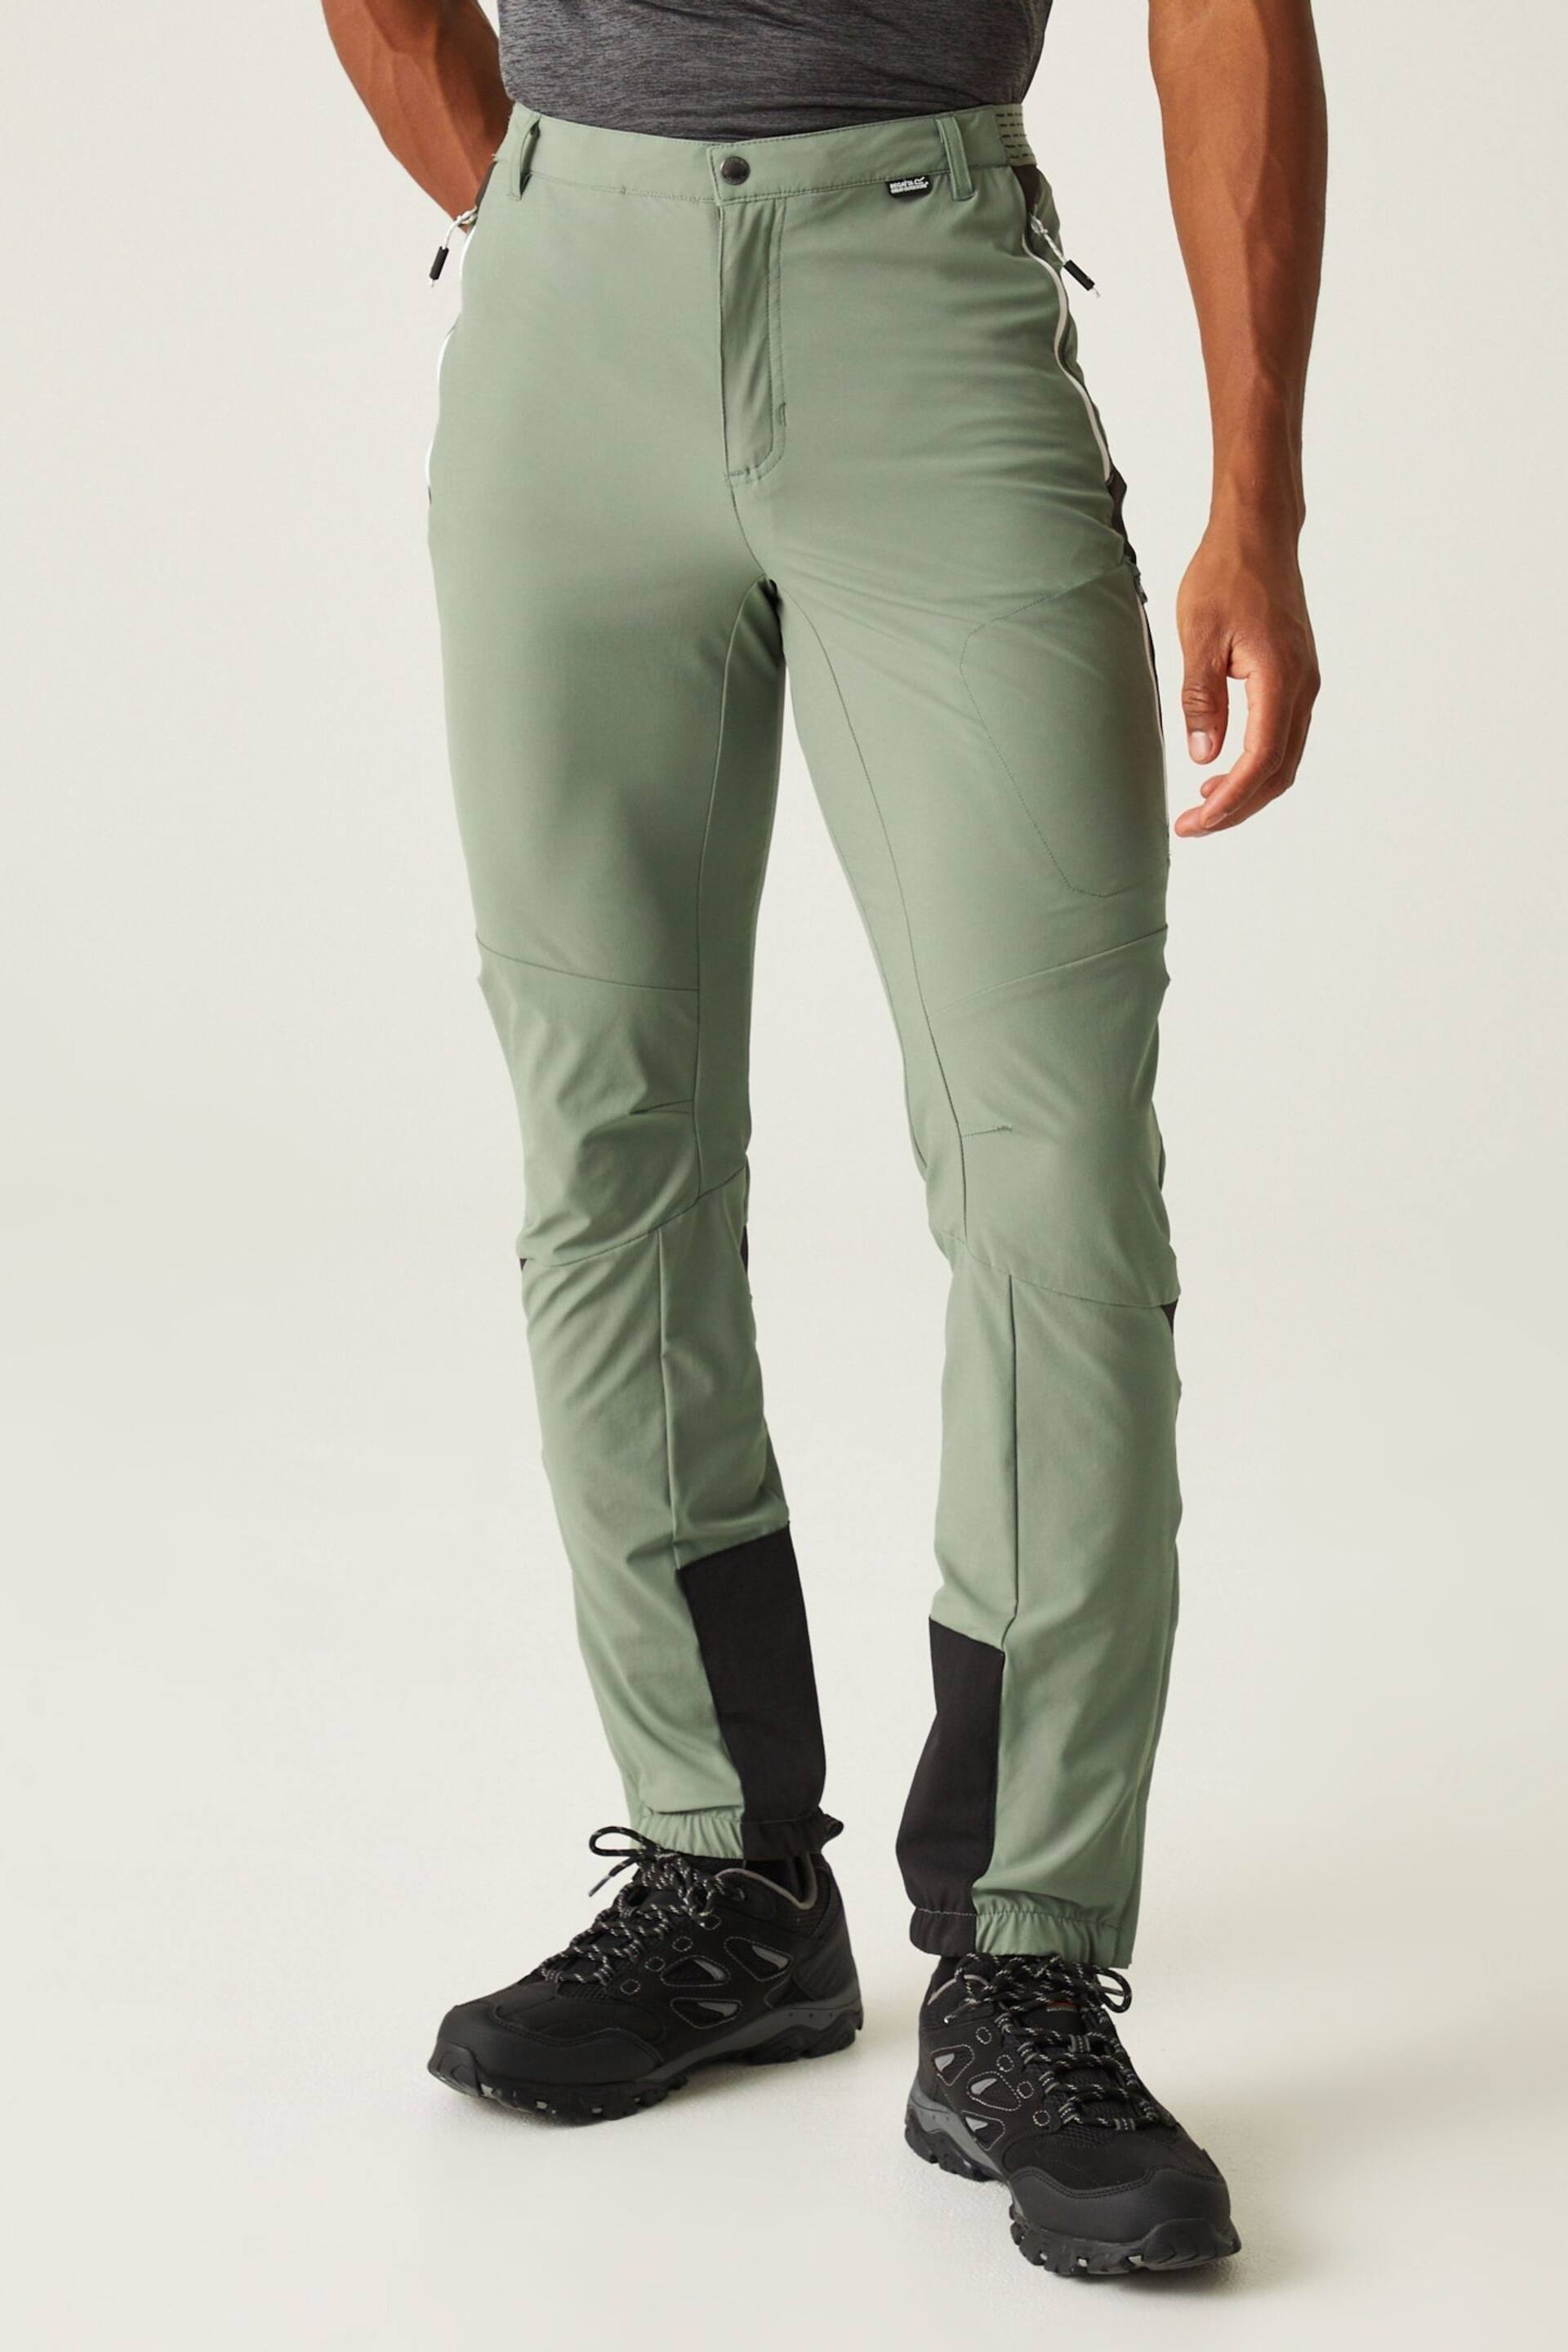 Regatta Green Mountain Trousers - Image 1 of 8